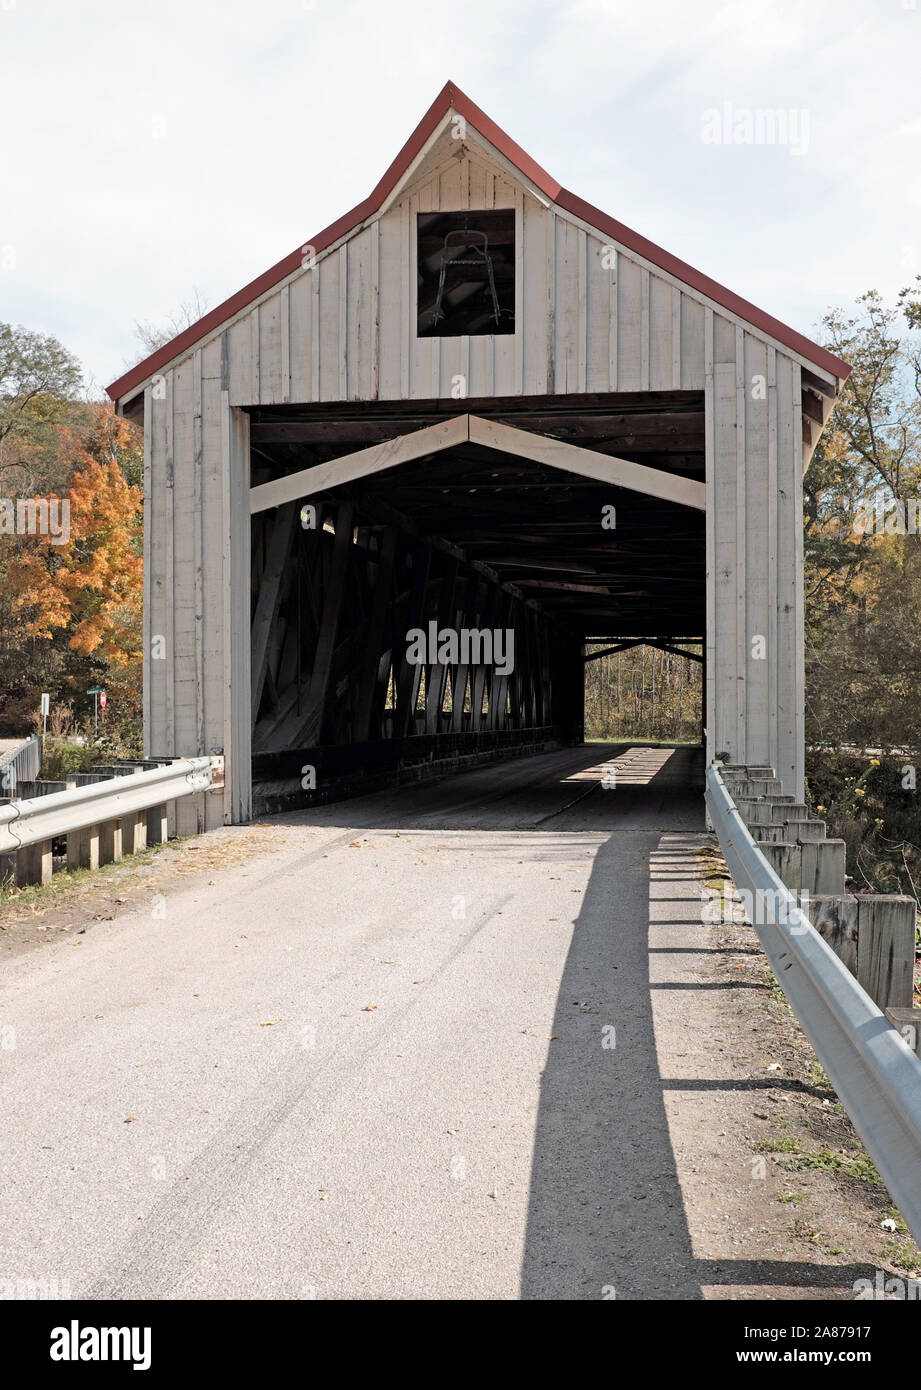 Built in 1867, the Mechanicsville wooden covered bridge in Geneva, Ohio is the longest single-span covered bridge in Ashtabula County. Stock Photo